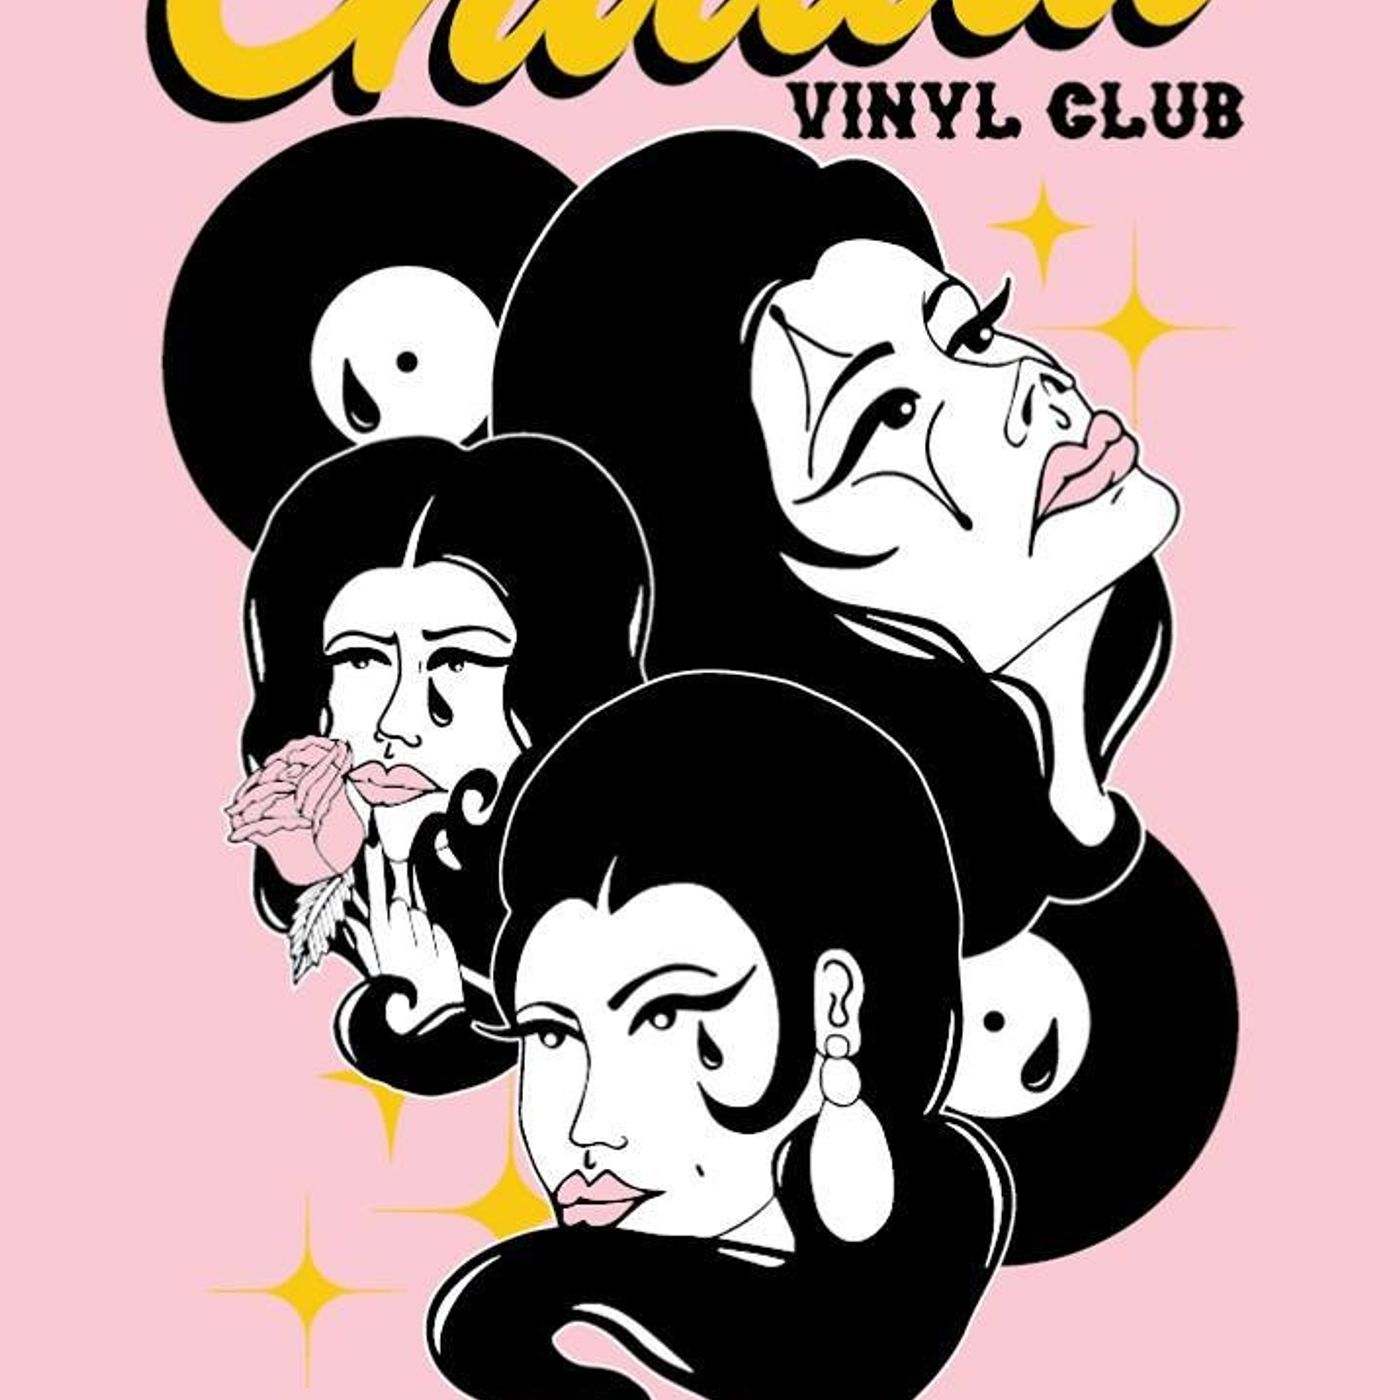 Thumbnail for "BONUS Episode: Chulita Vinyl Club".